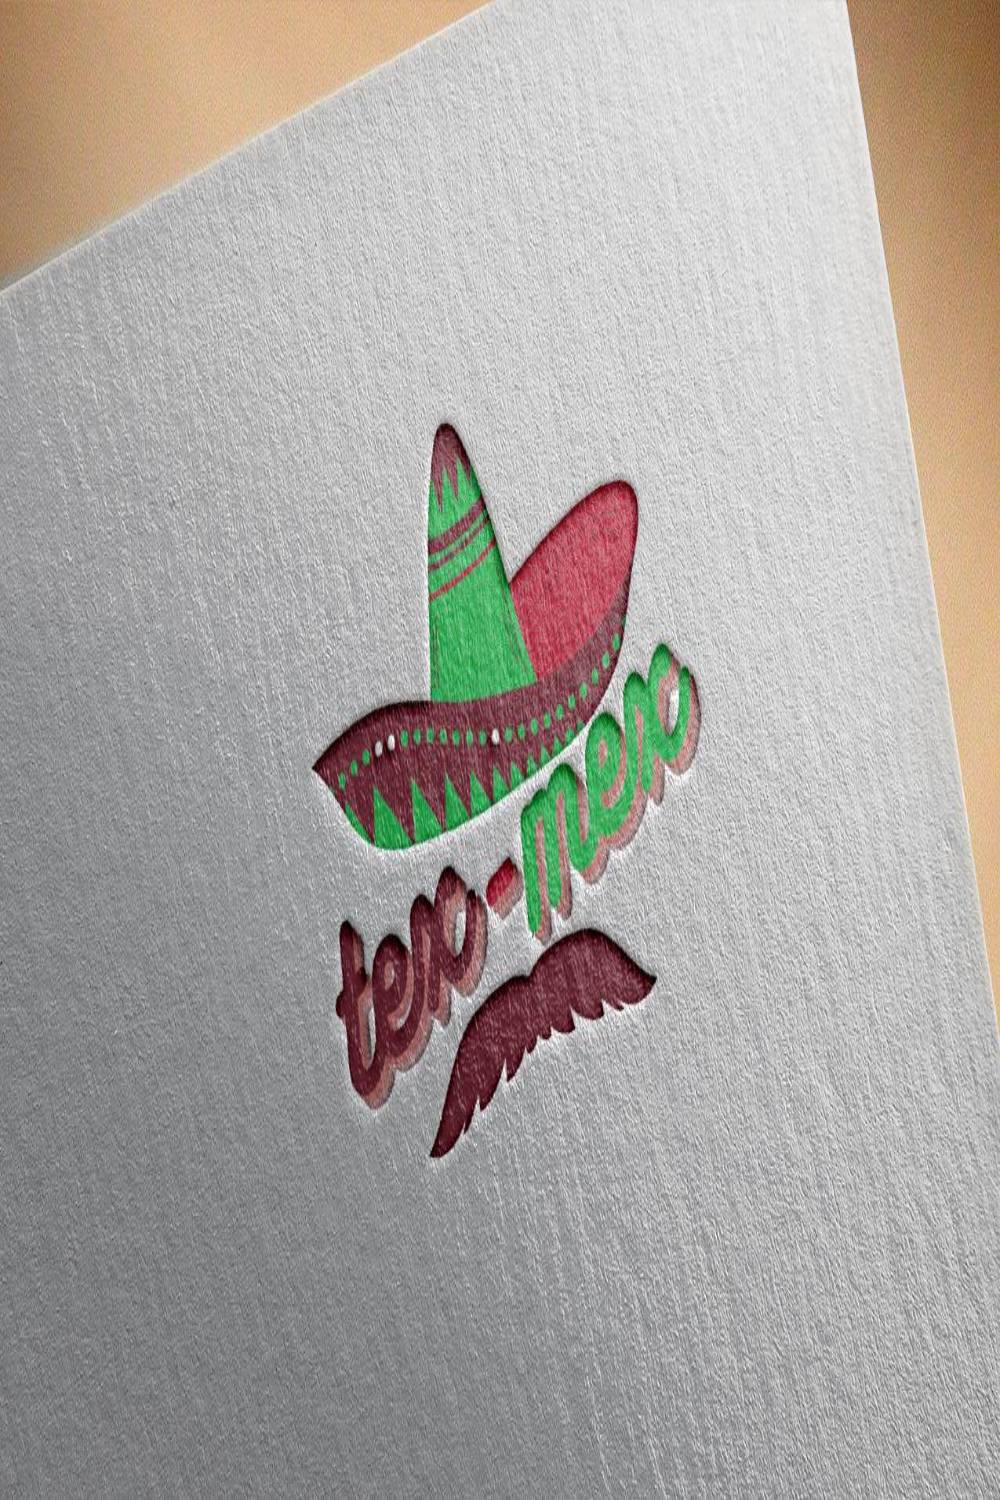 TexMex Food Logo Design pinterest image.